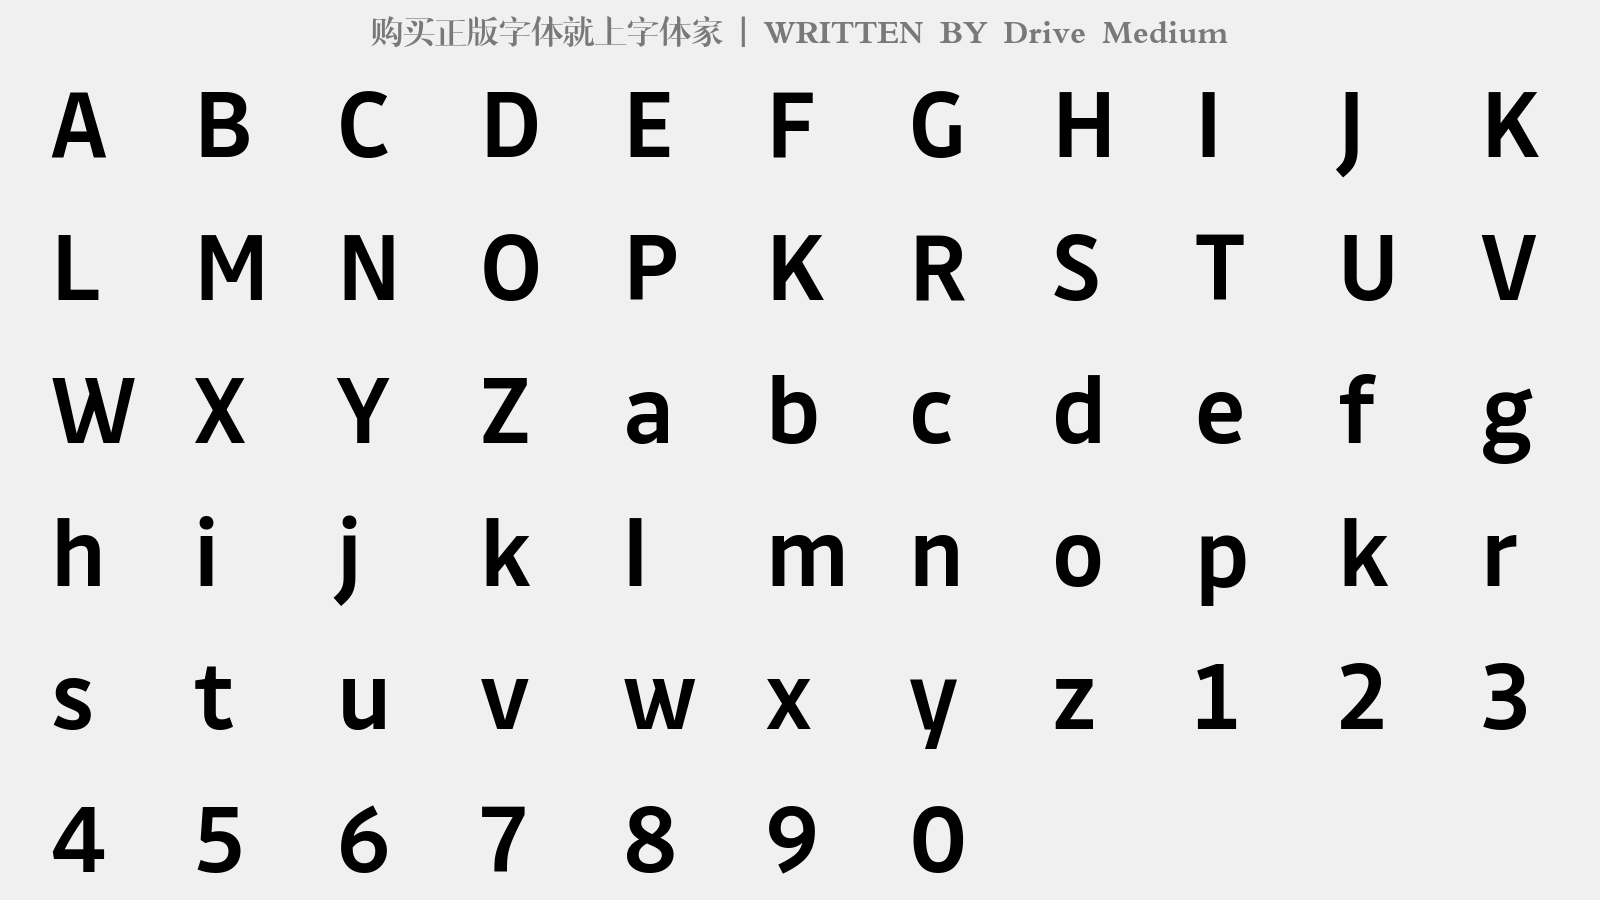 Drive Medium - 大写字母/小写字母/数字